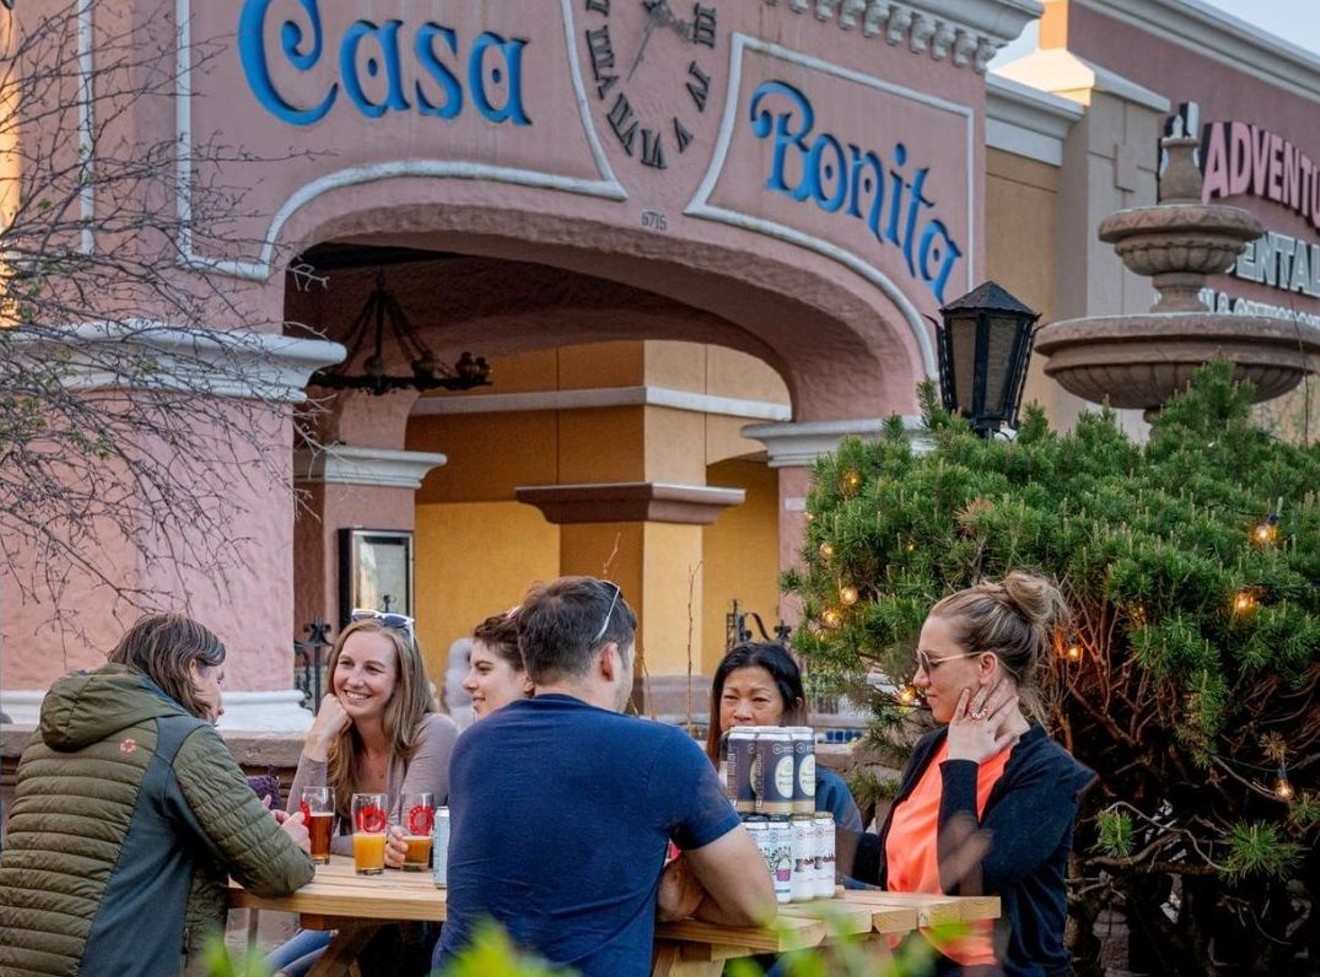 Westfax Brewing is just steps away from Casa Bonita.